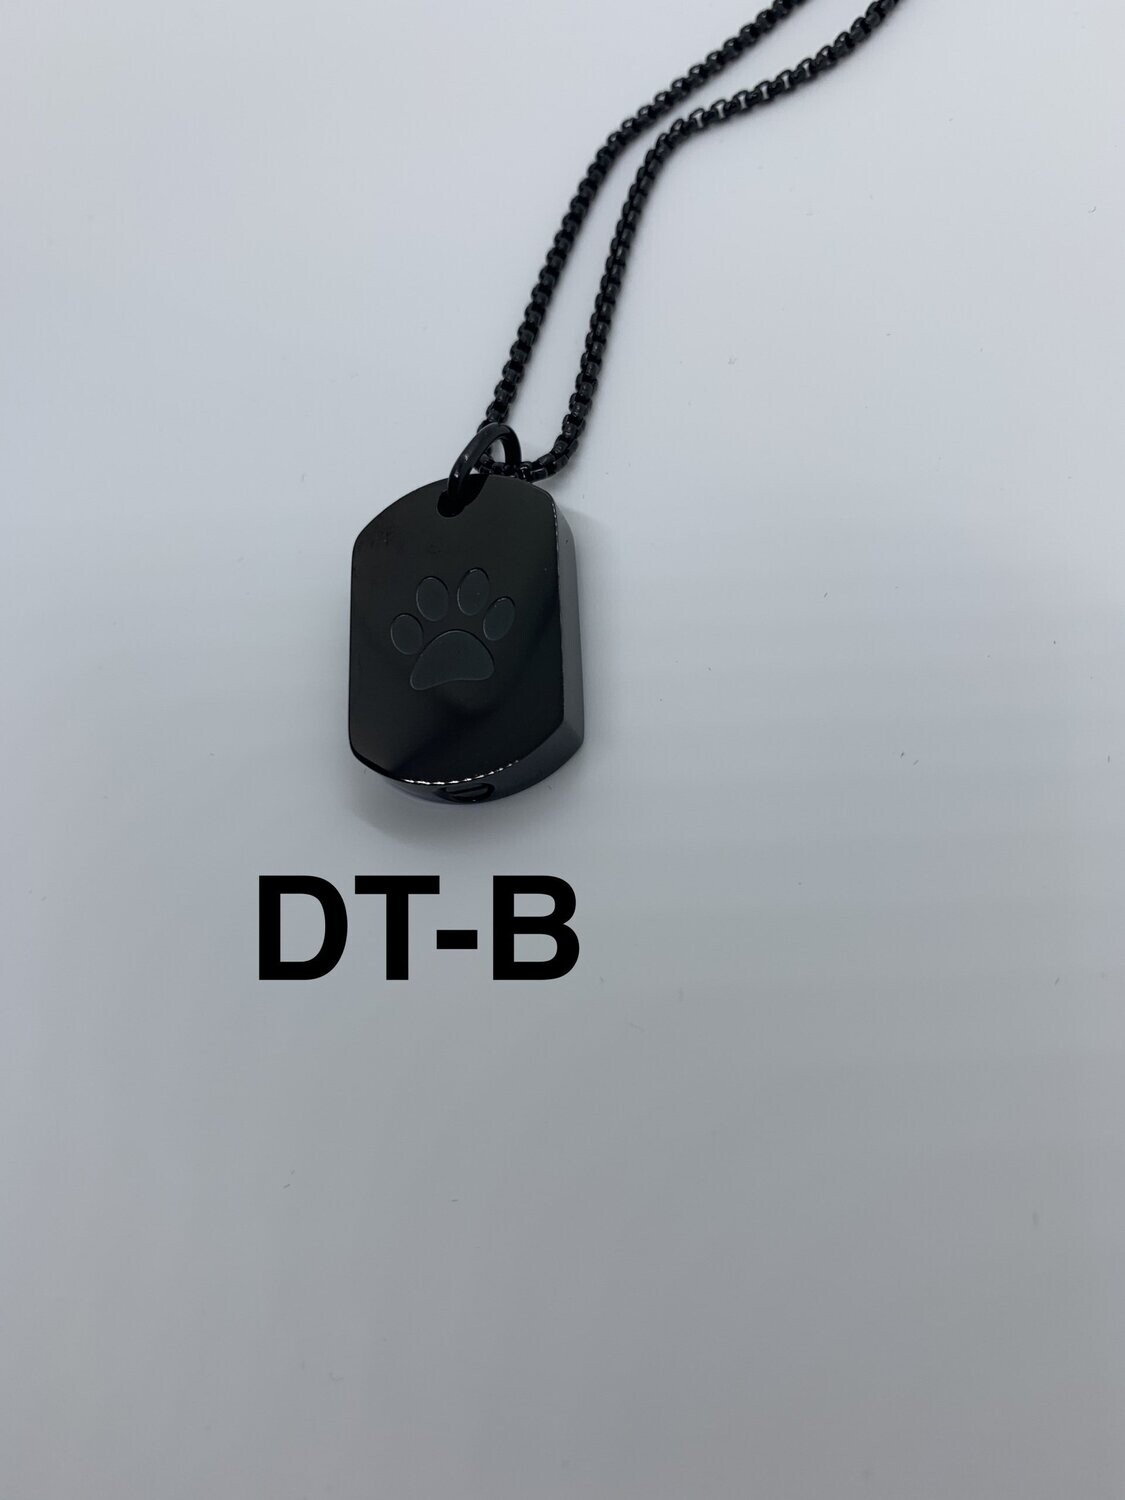 DT-B